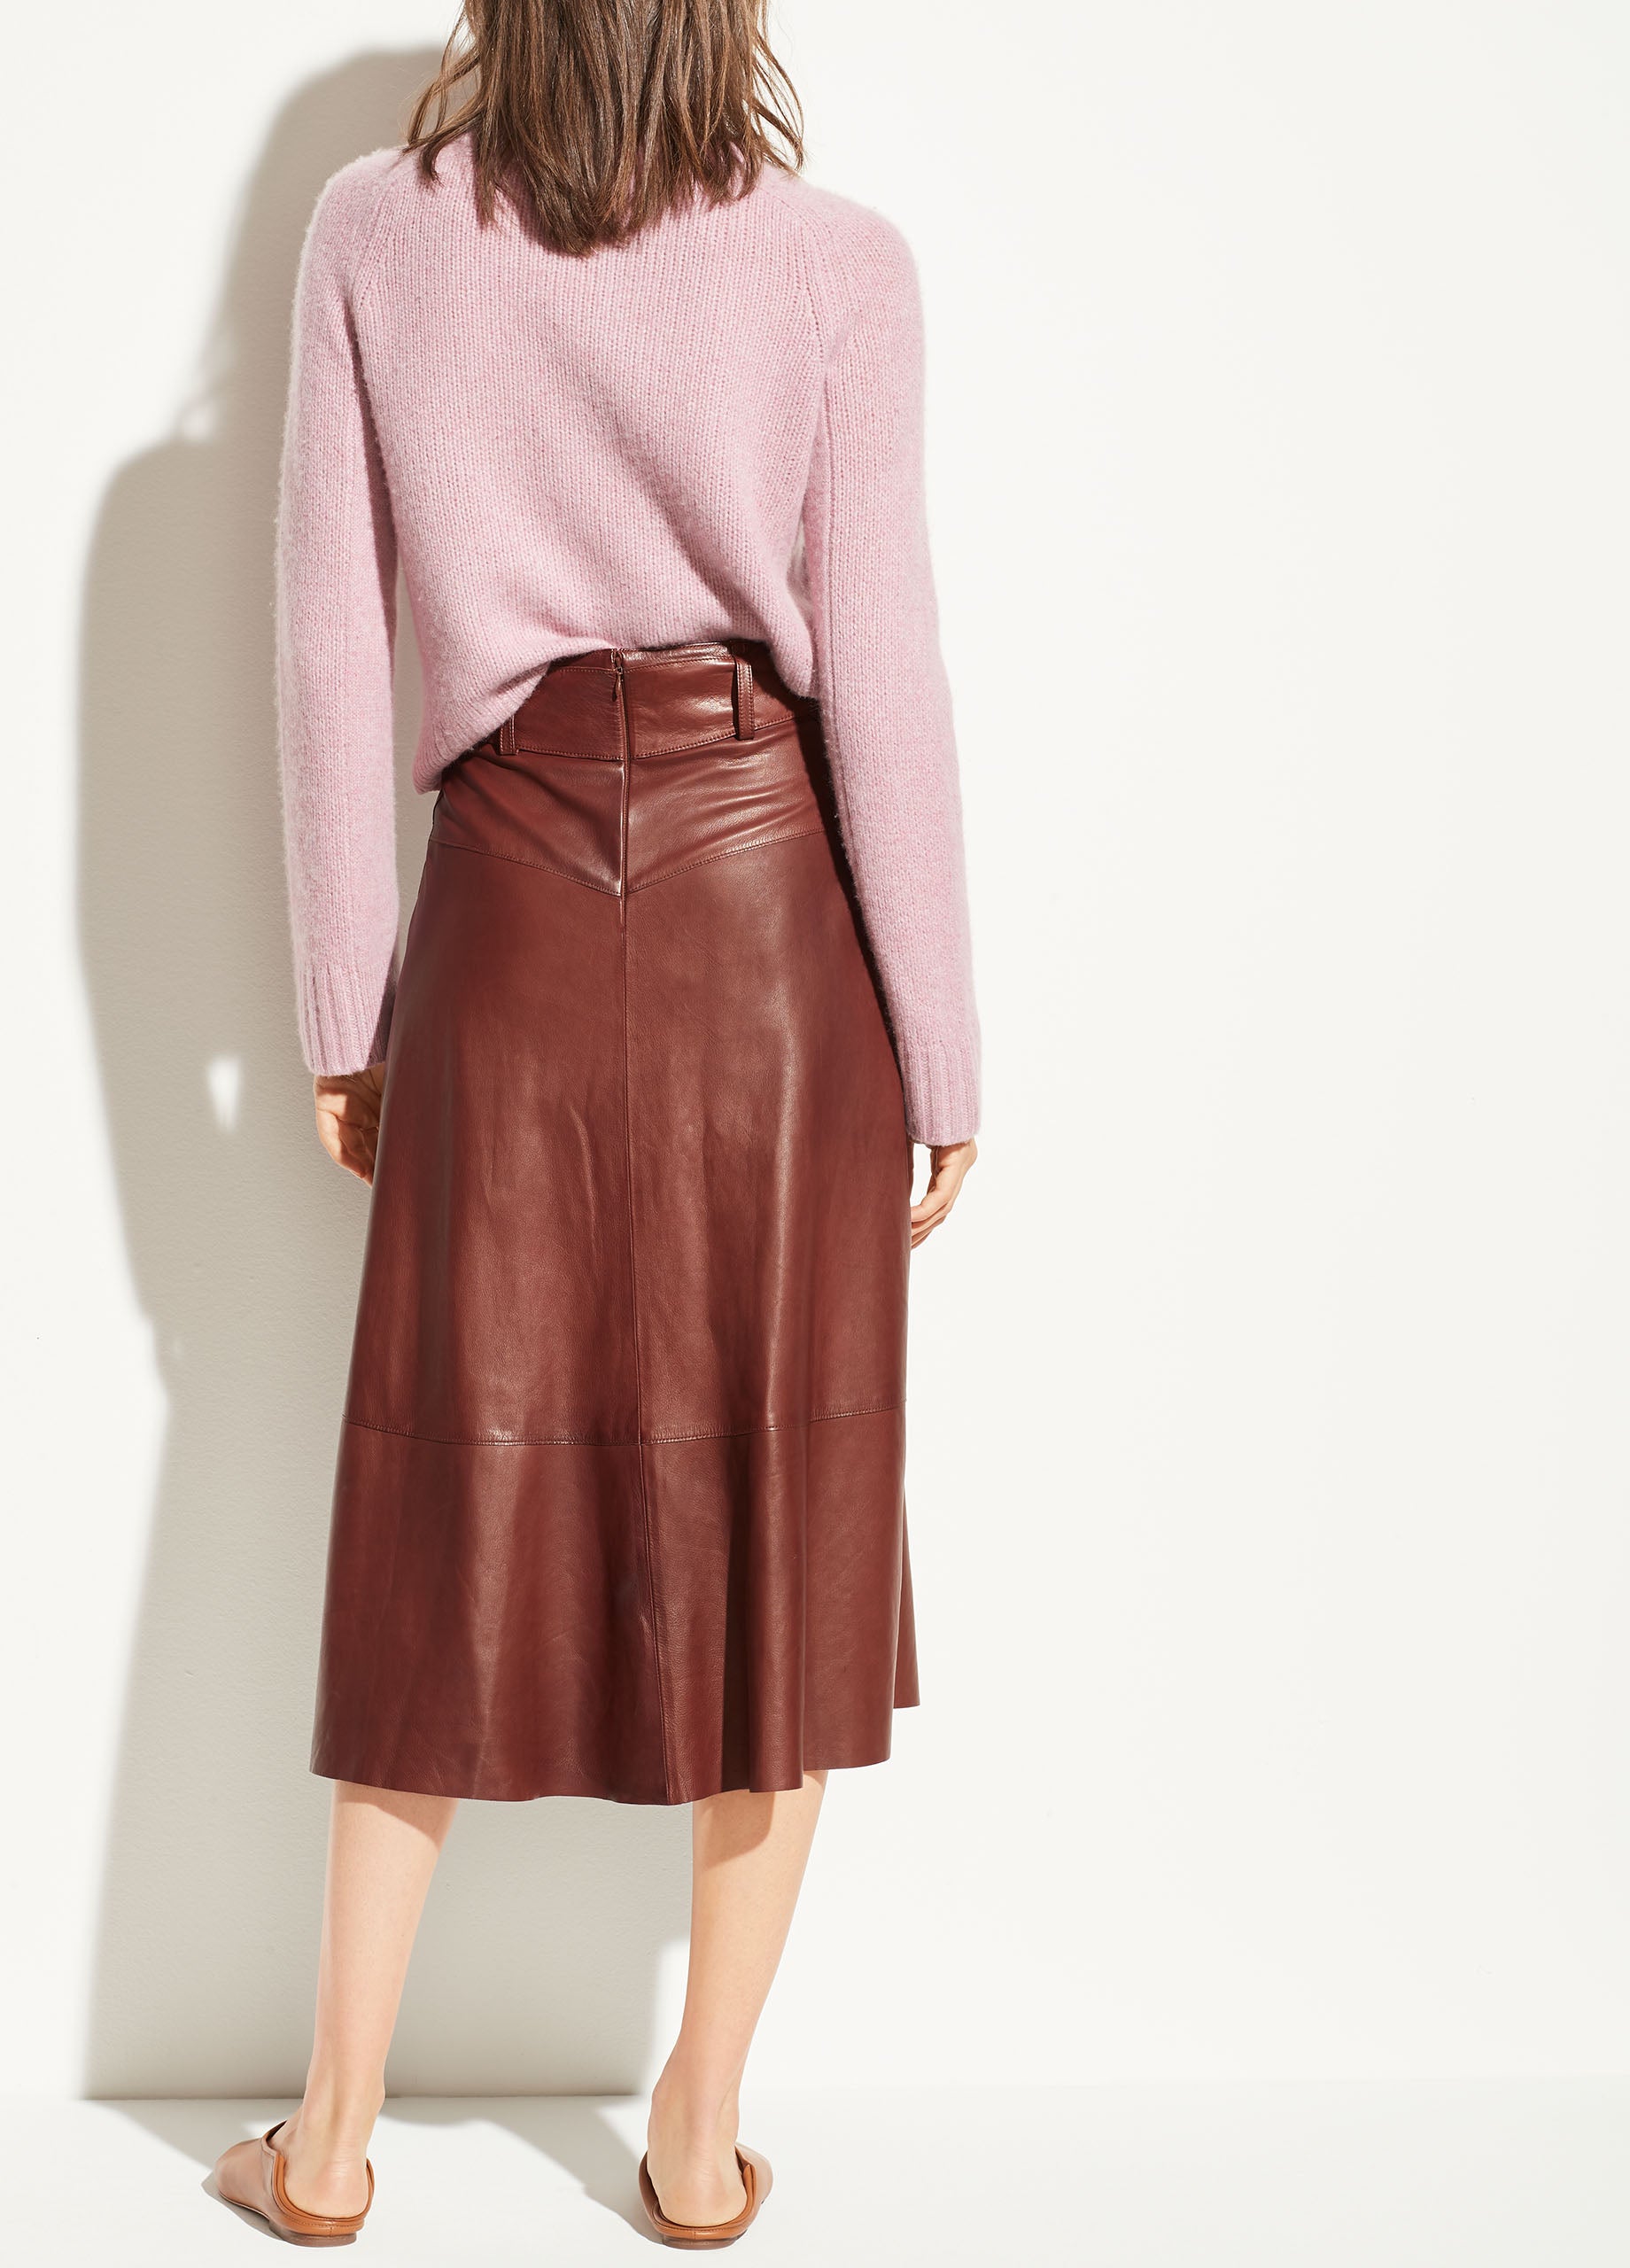 vince leather skirt brown